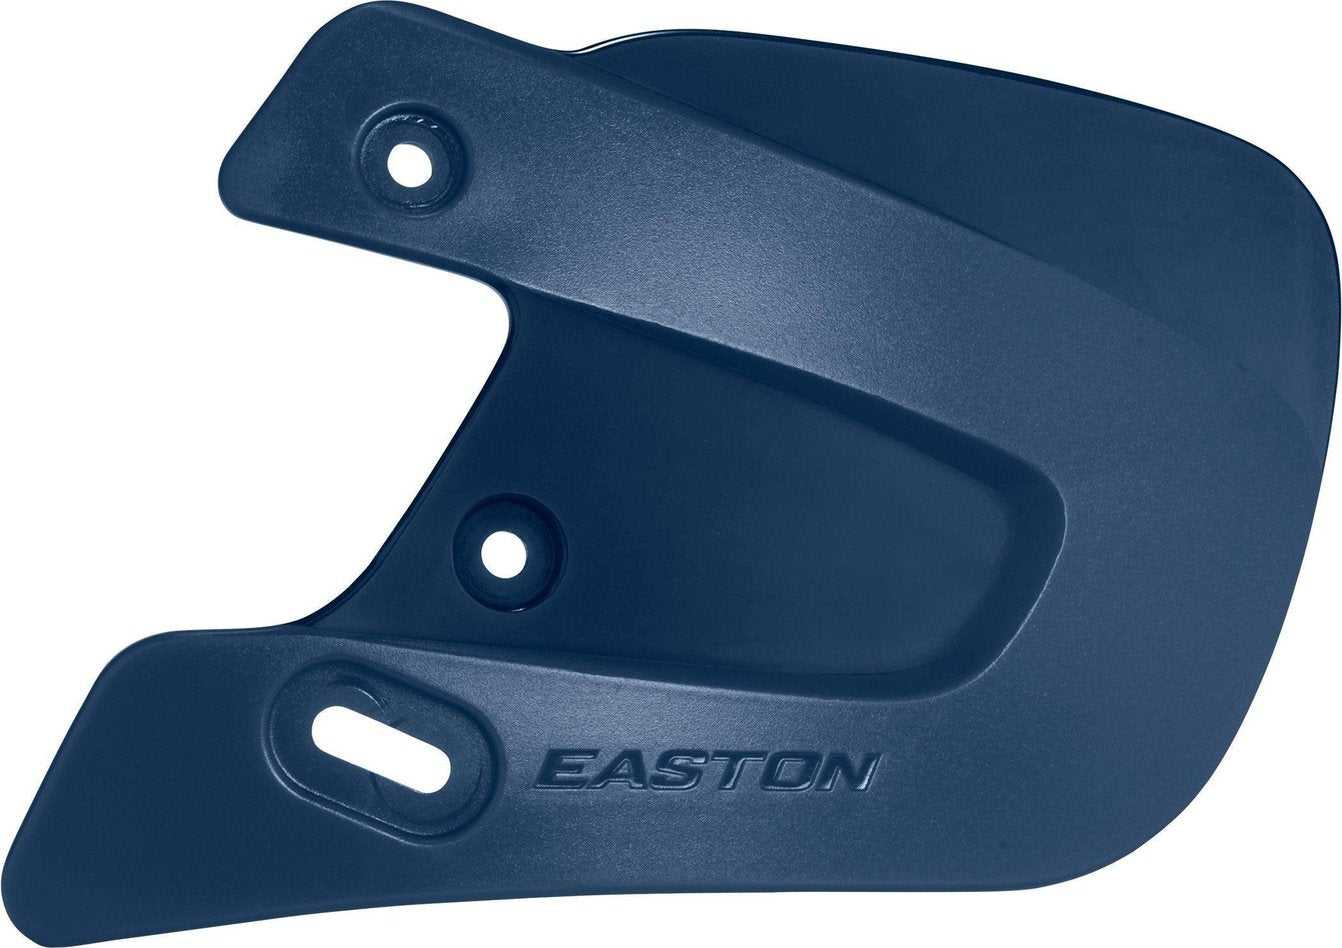 Easton Helmet Extended Jaw Guard - Navy